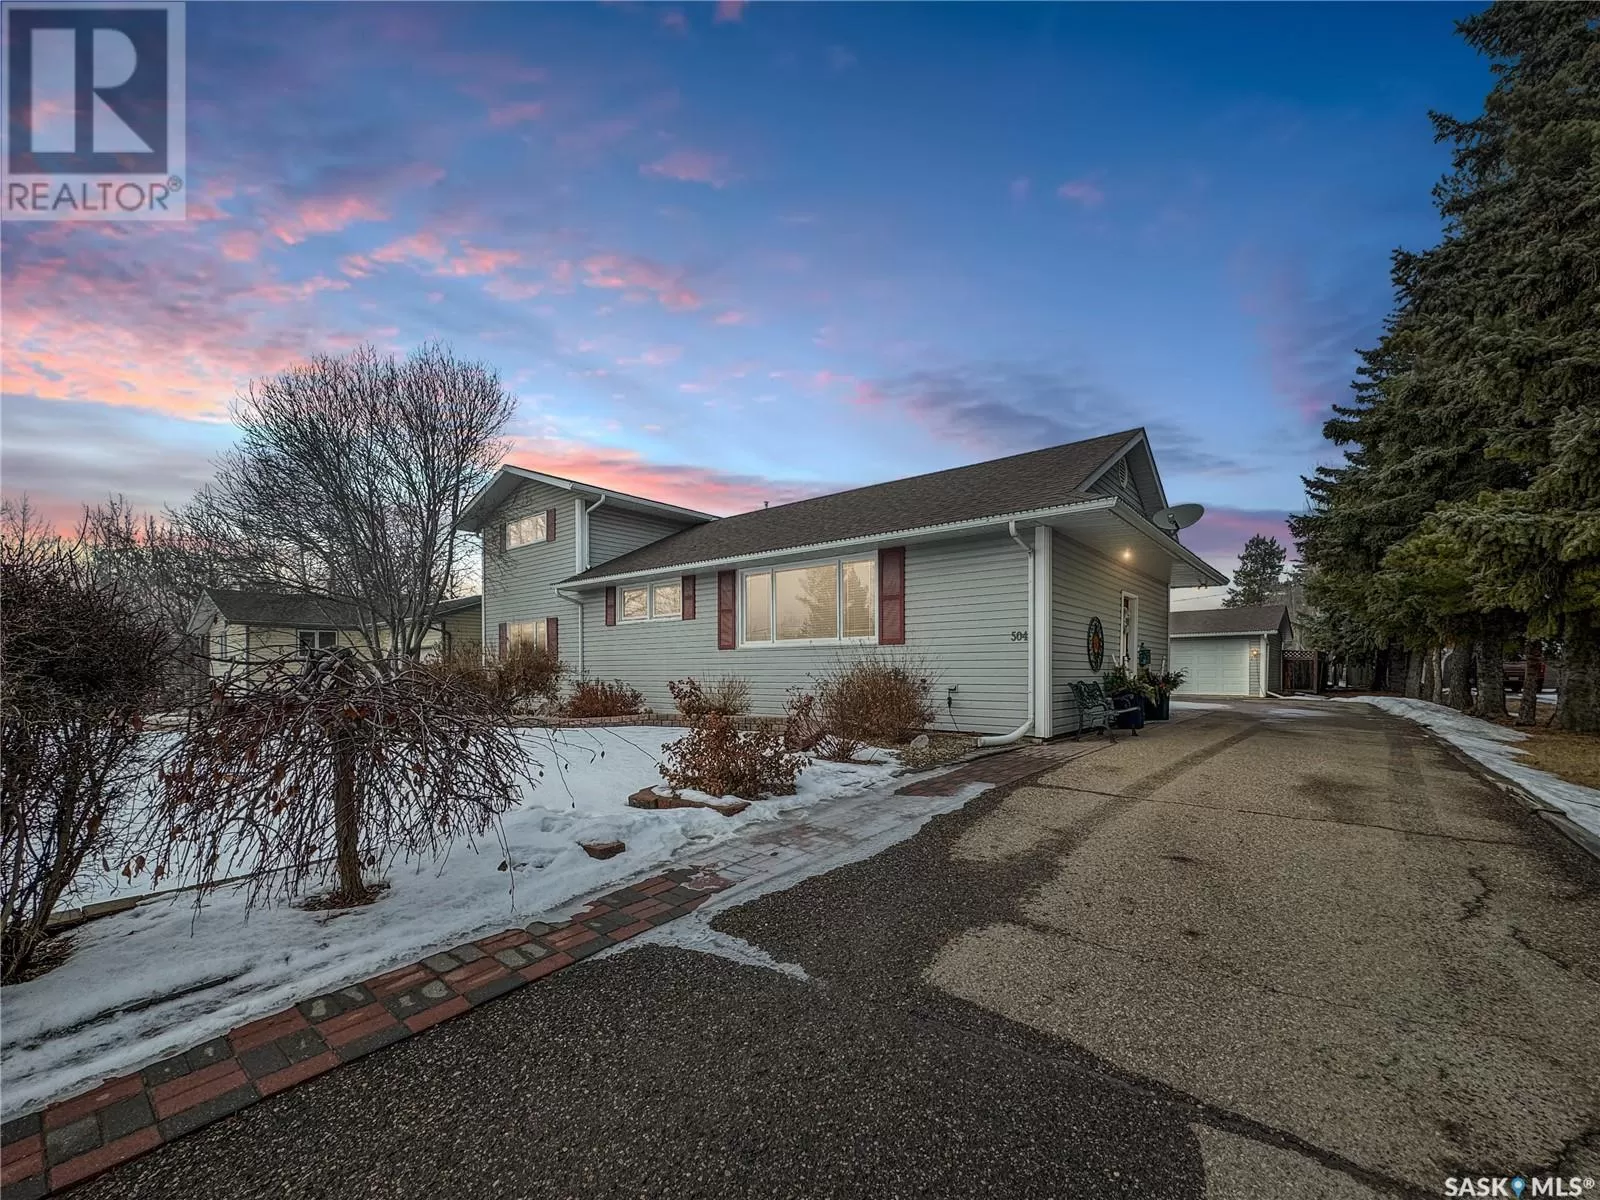 House for rent: 504 Mcconnell Drive, Maidstone, Saskatchewan S0M 1M0